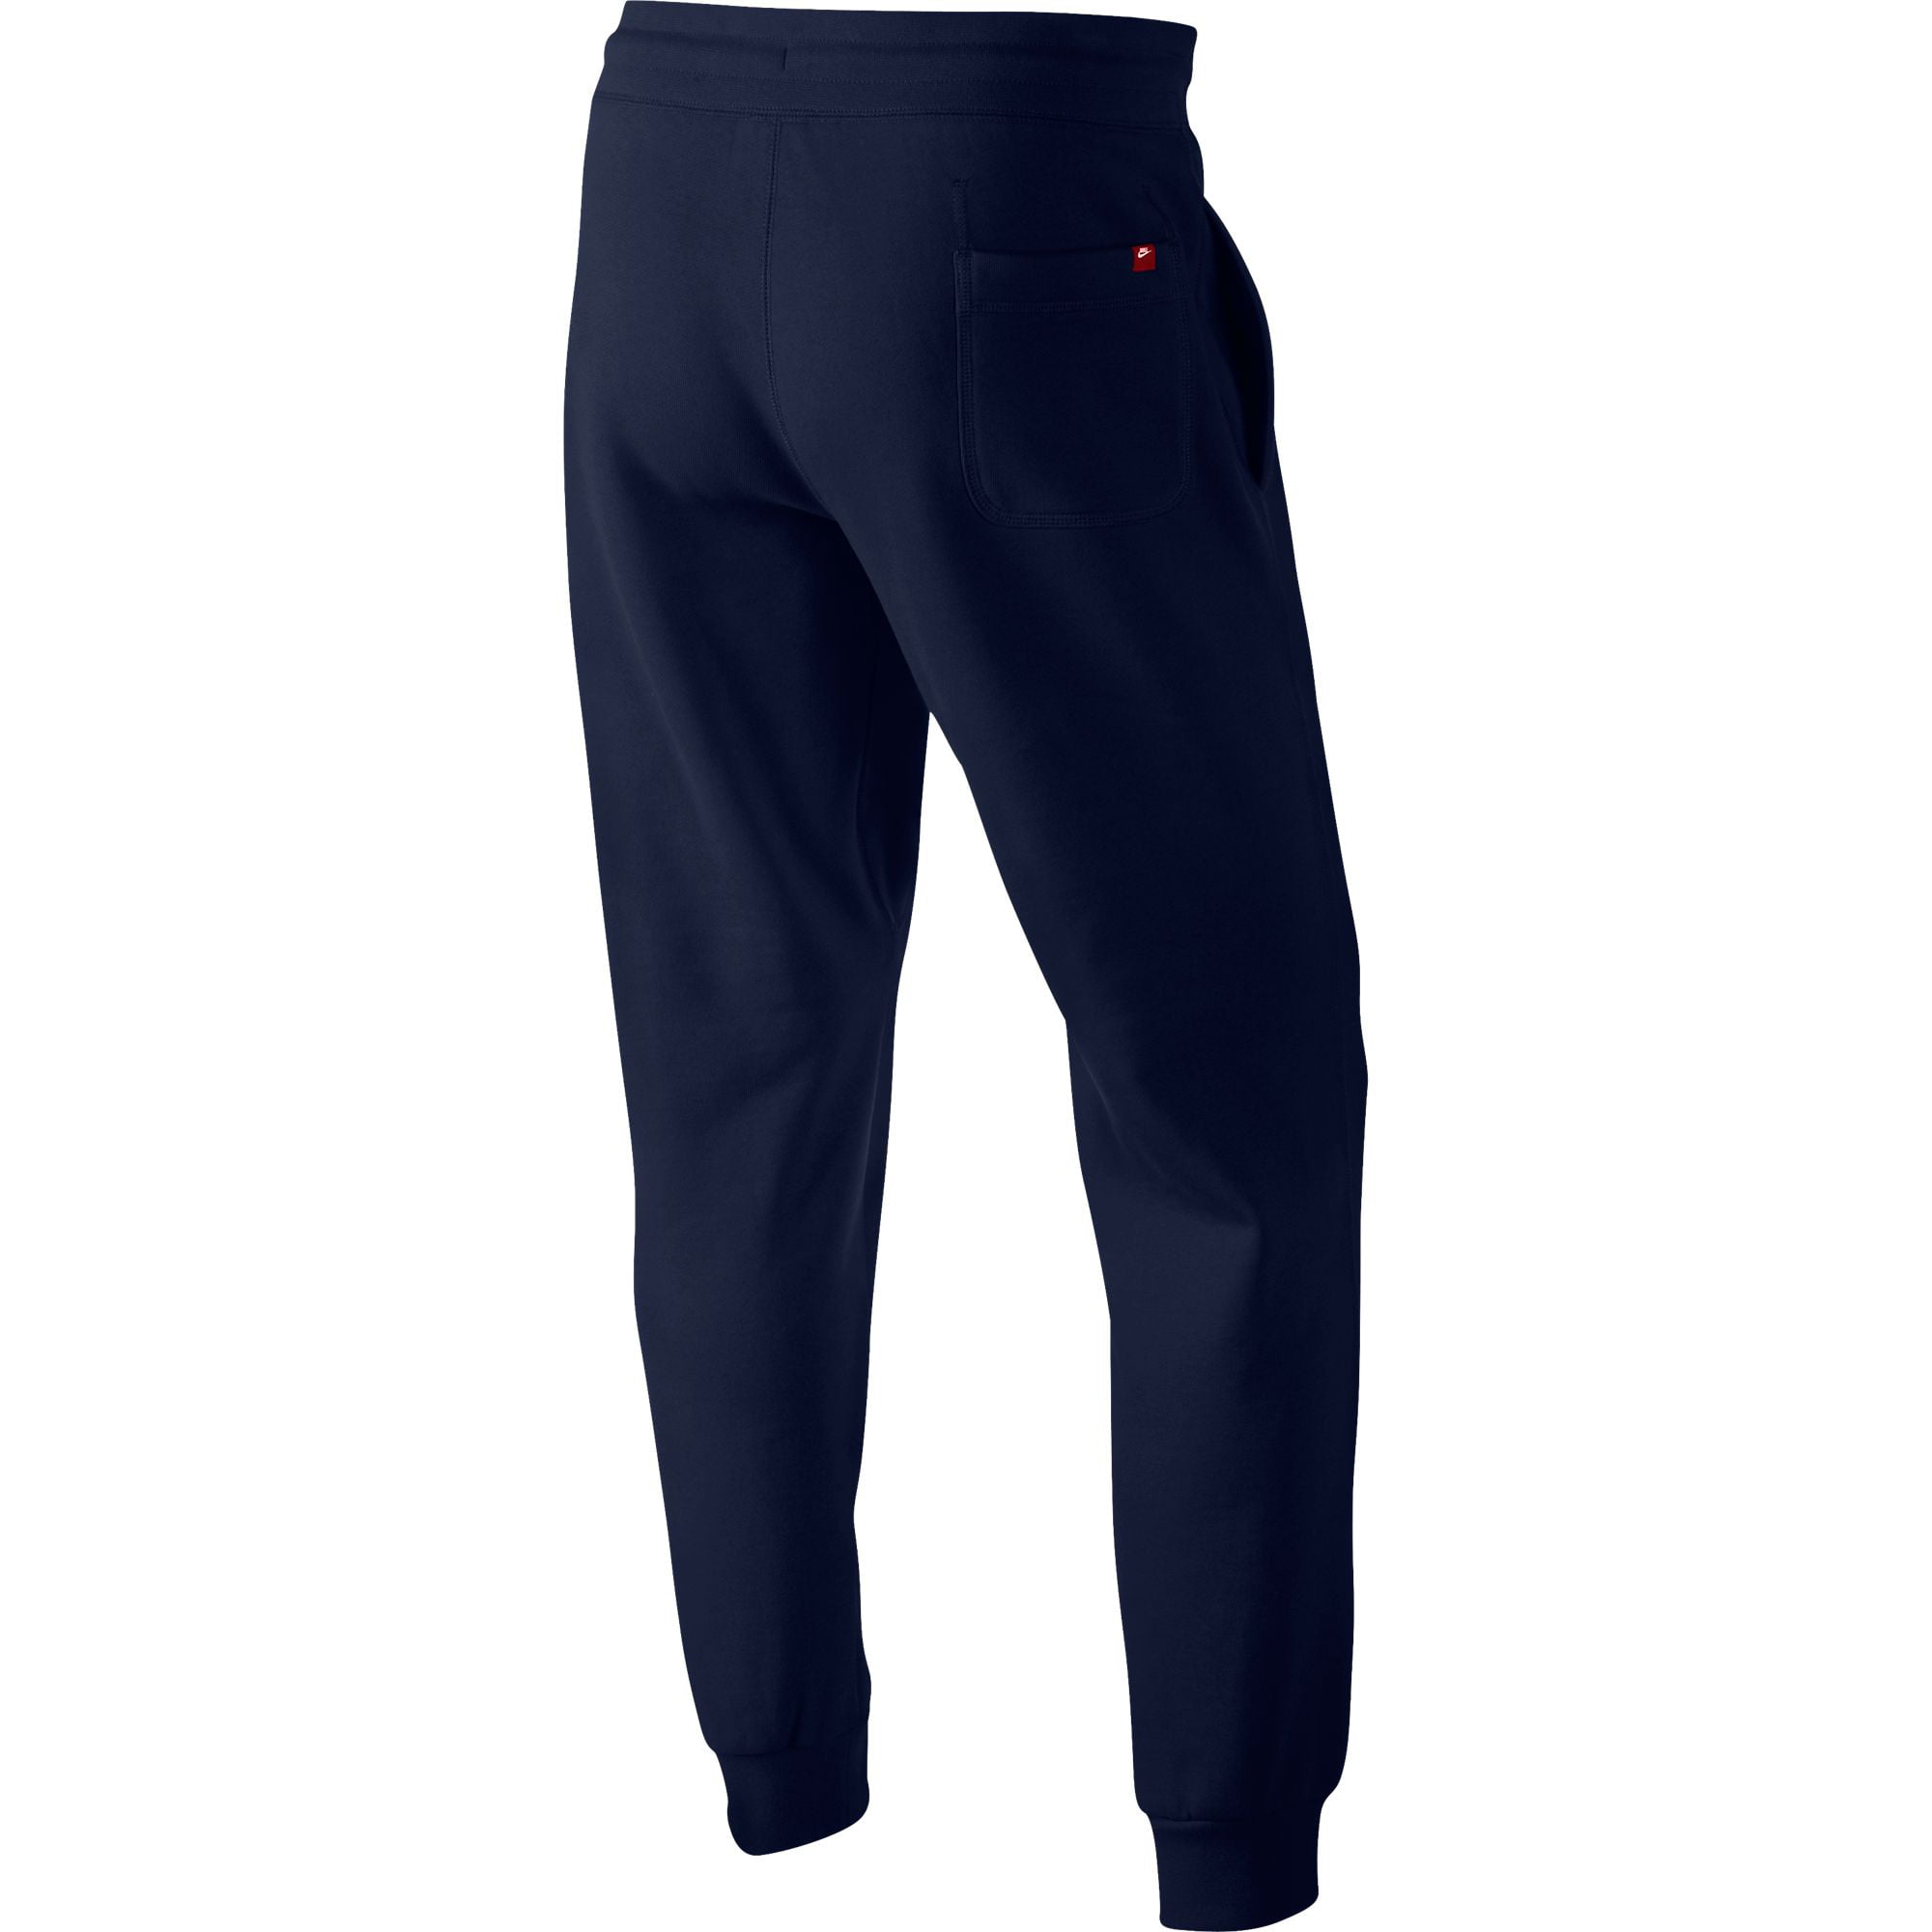 Nike Men's Cuffed Fleece Navy Blue 598871-451 - Walmart.com